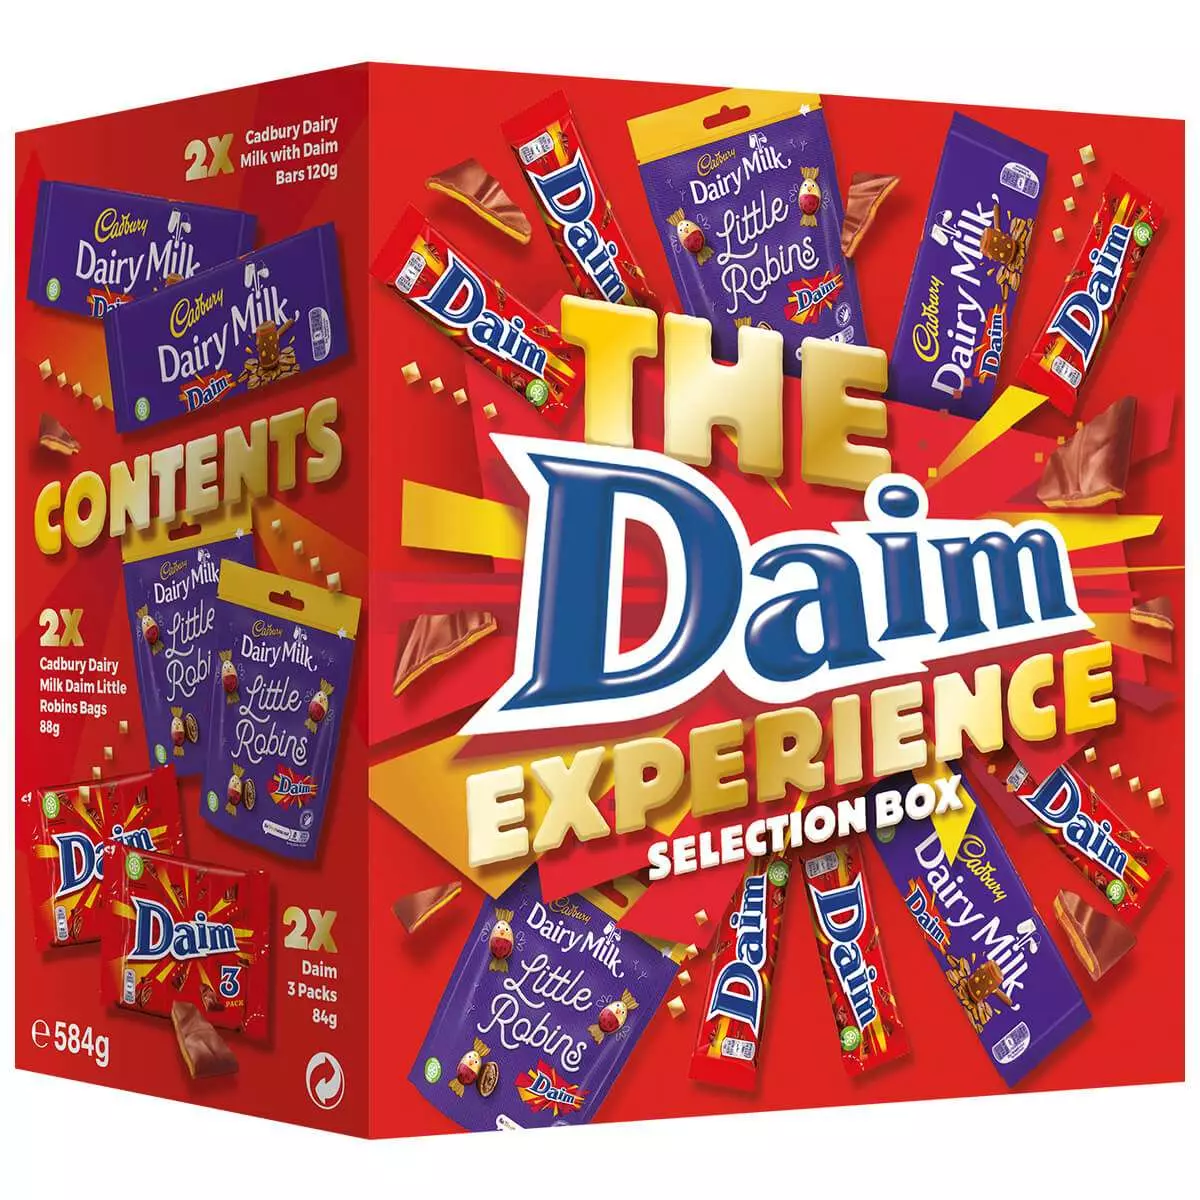 The Daim box is a Christmas treat (